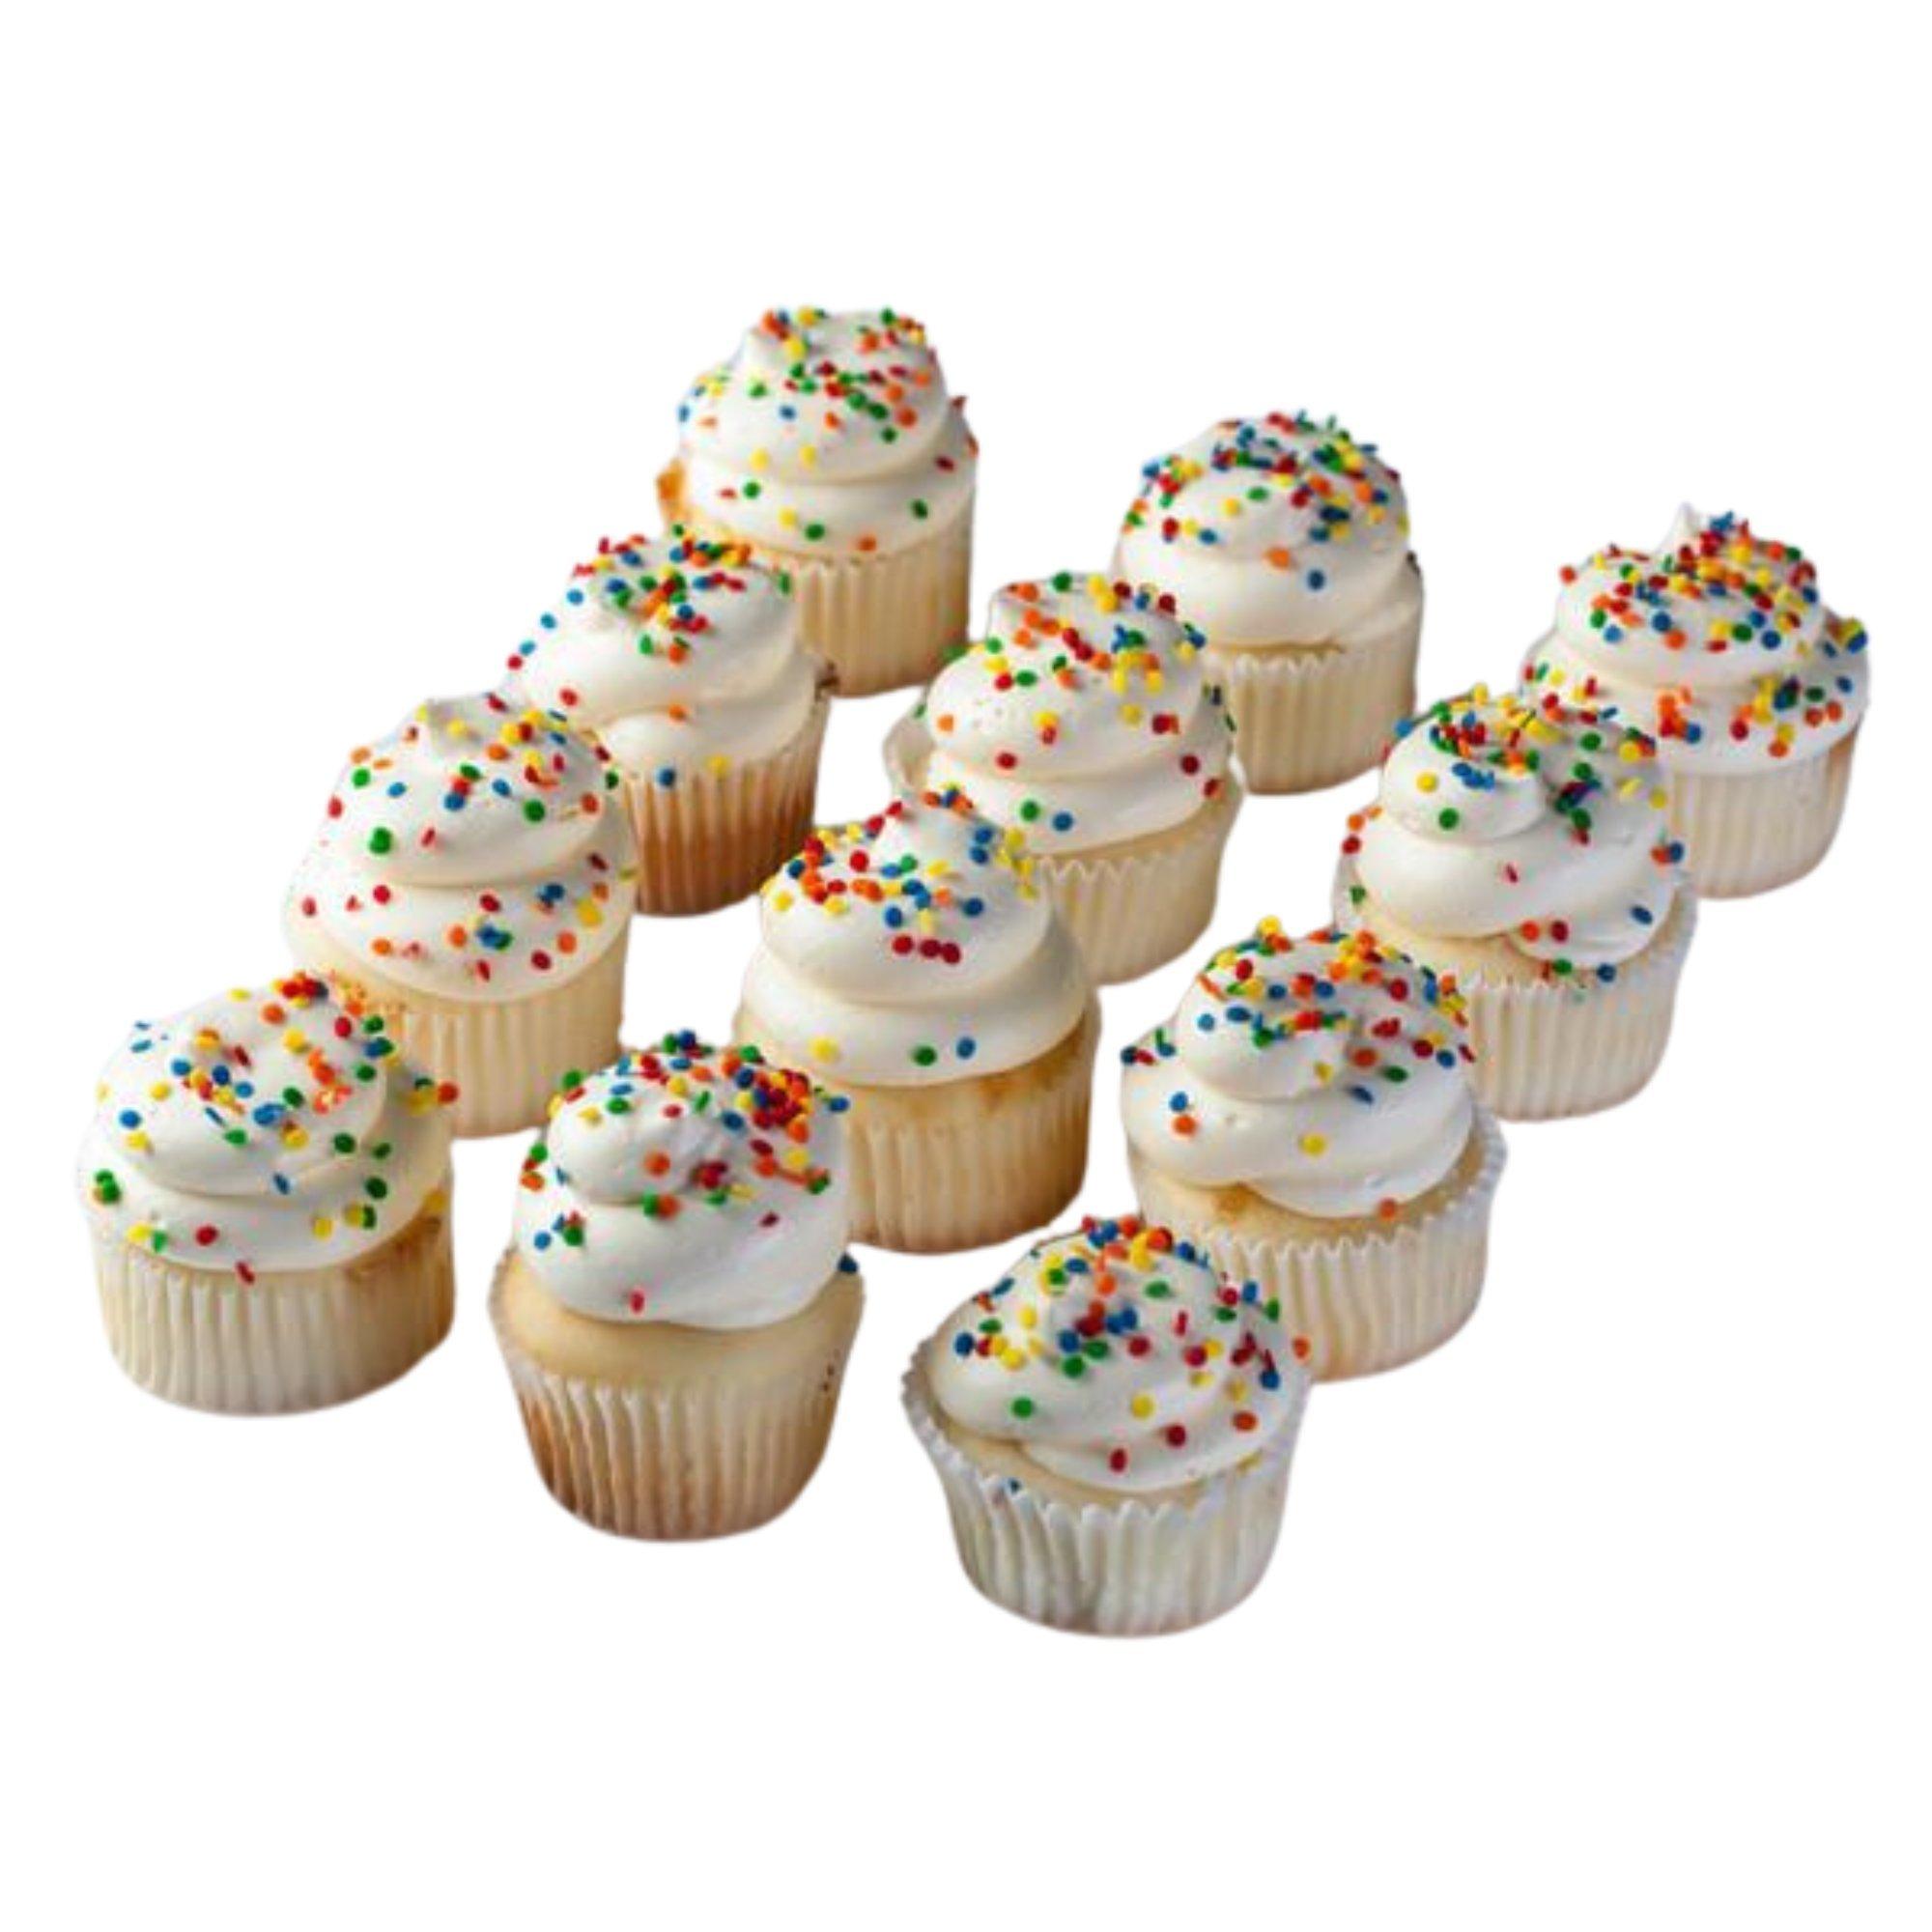 Raiders Cupcakes at Freed's Bakery 